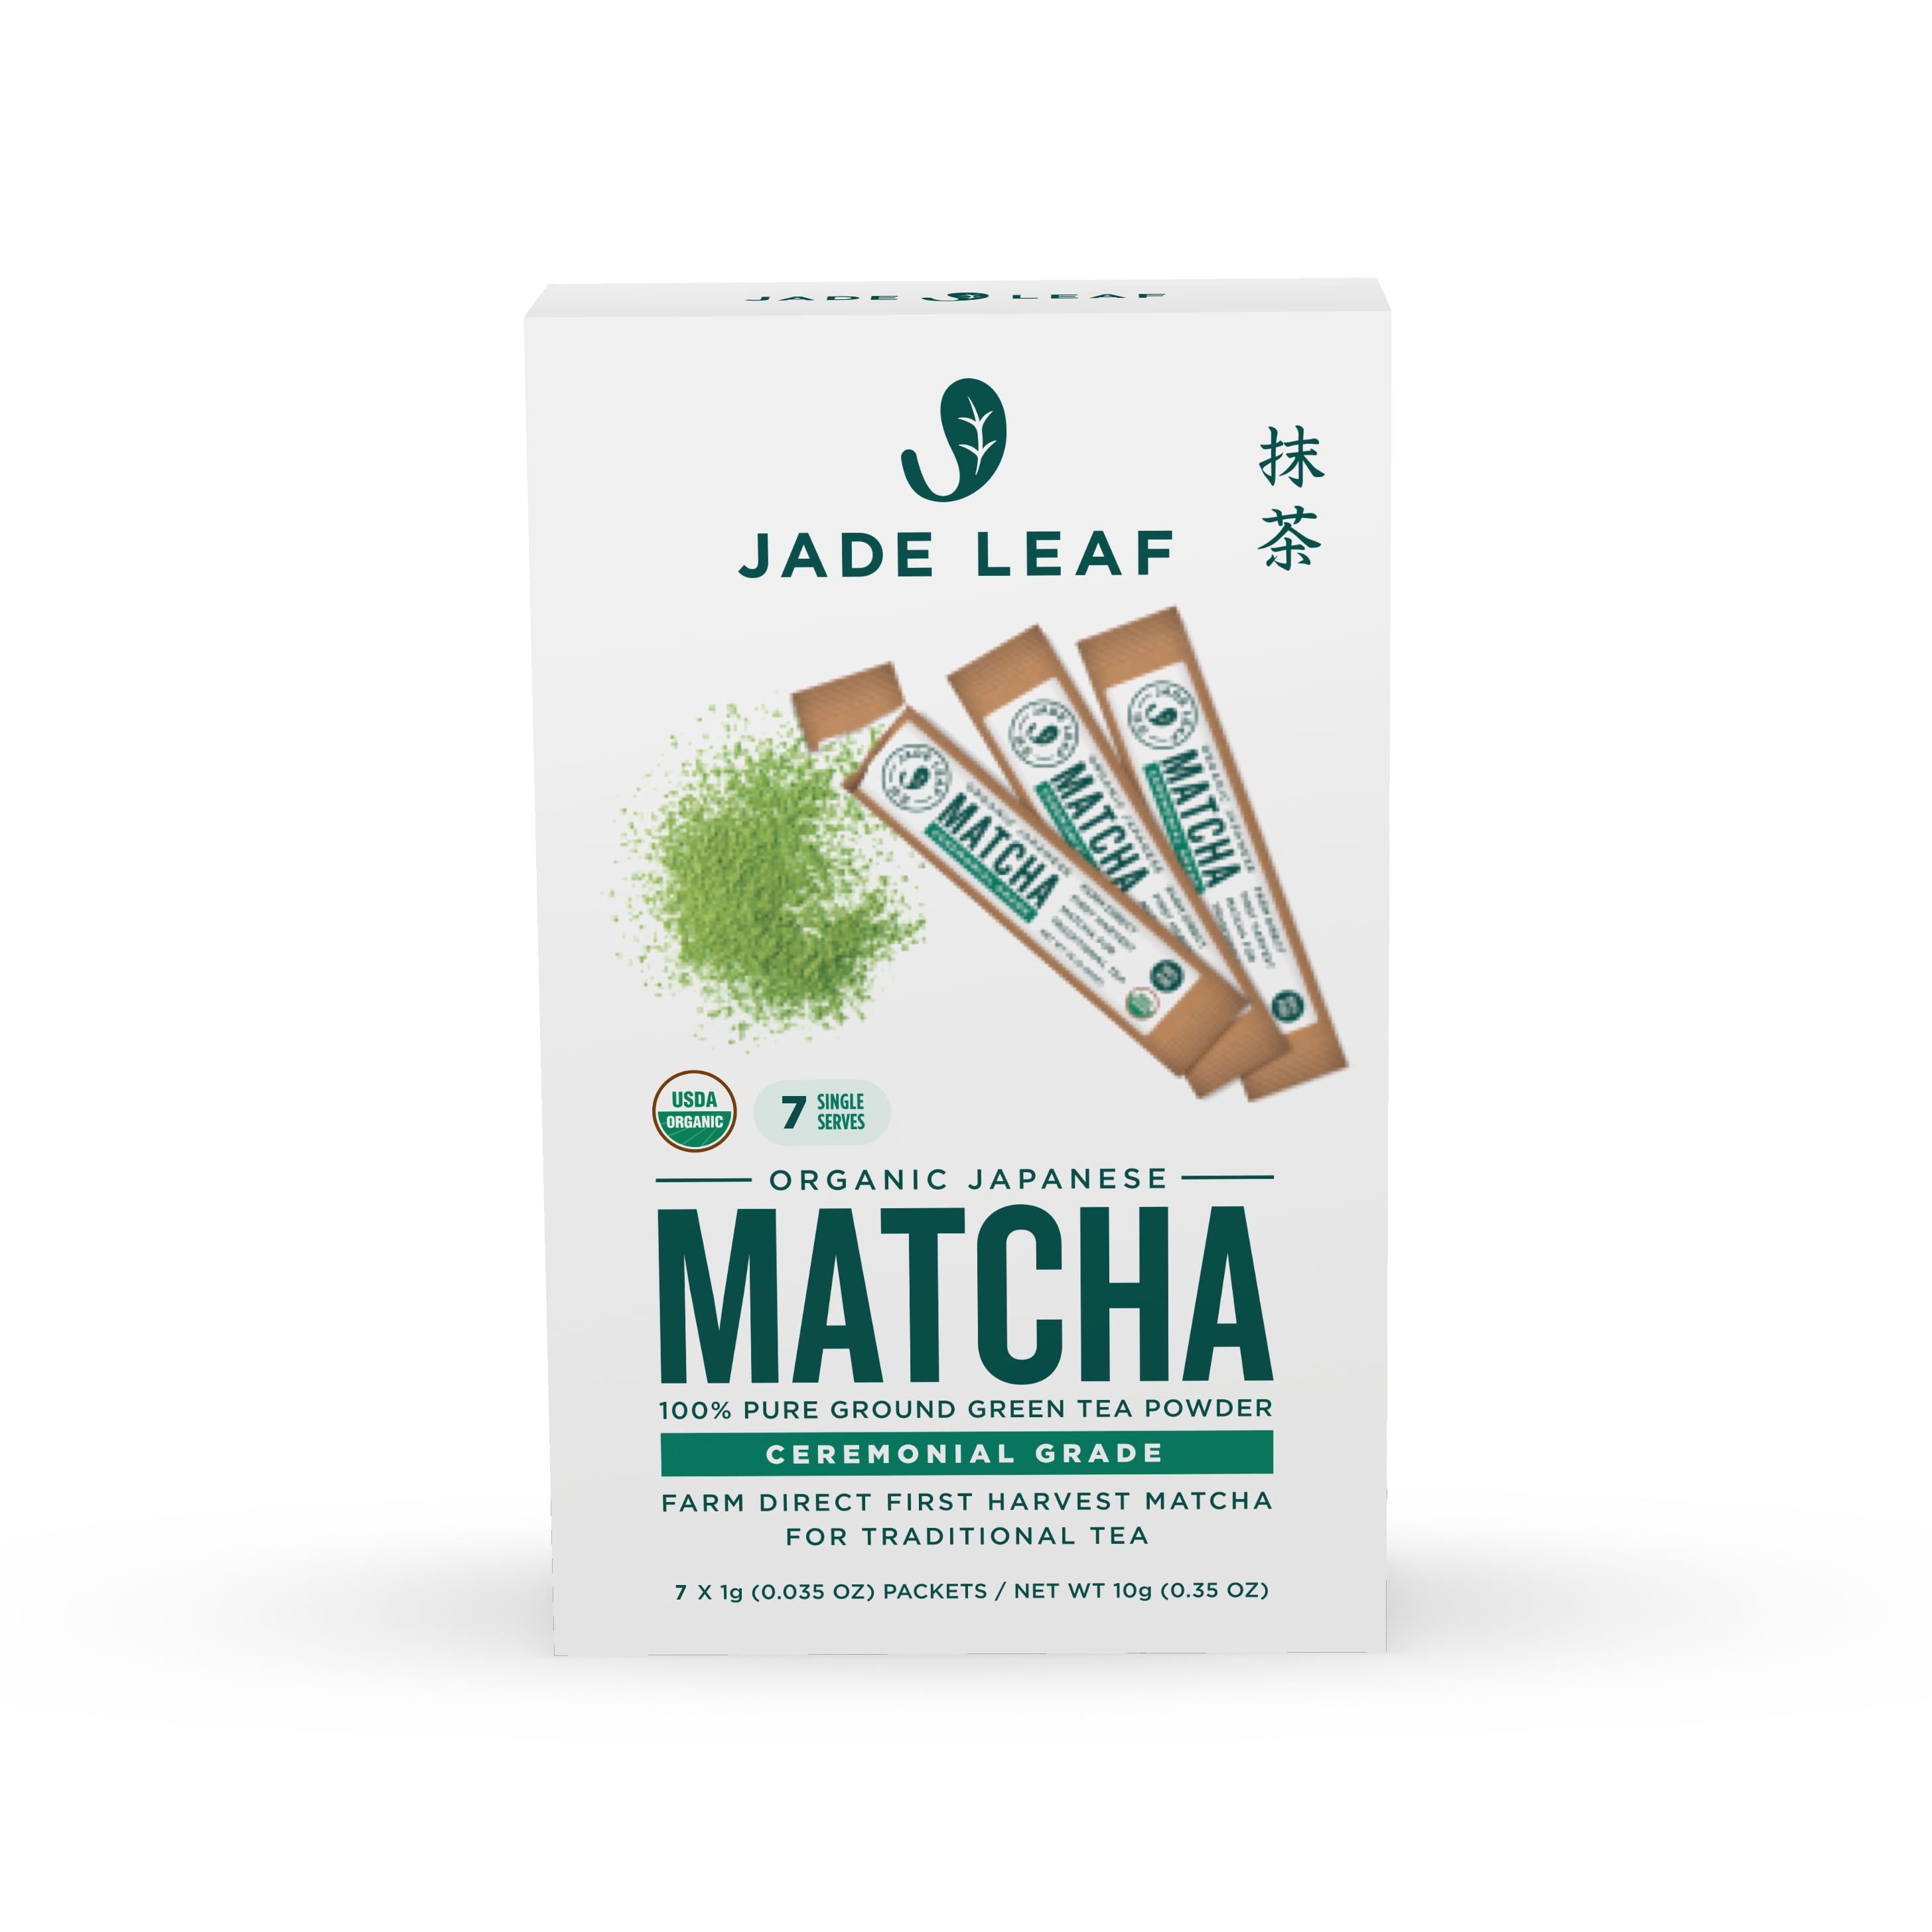 Matcha Starter Kit – Chalait